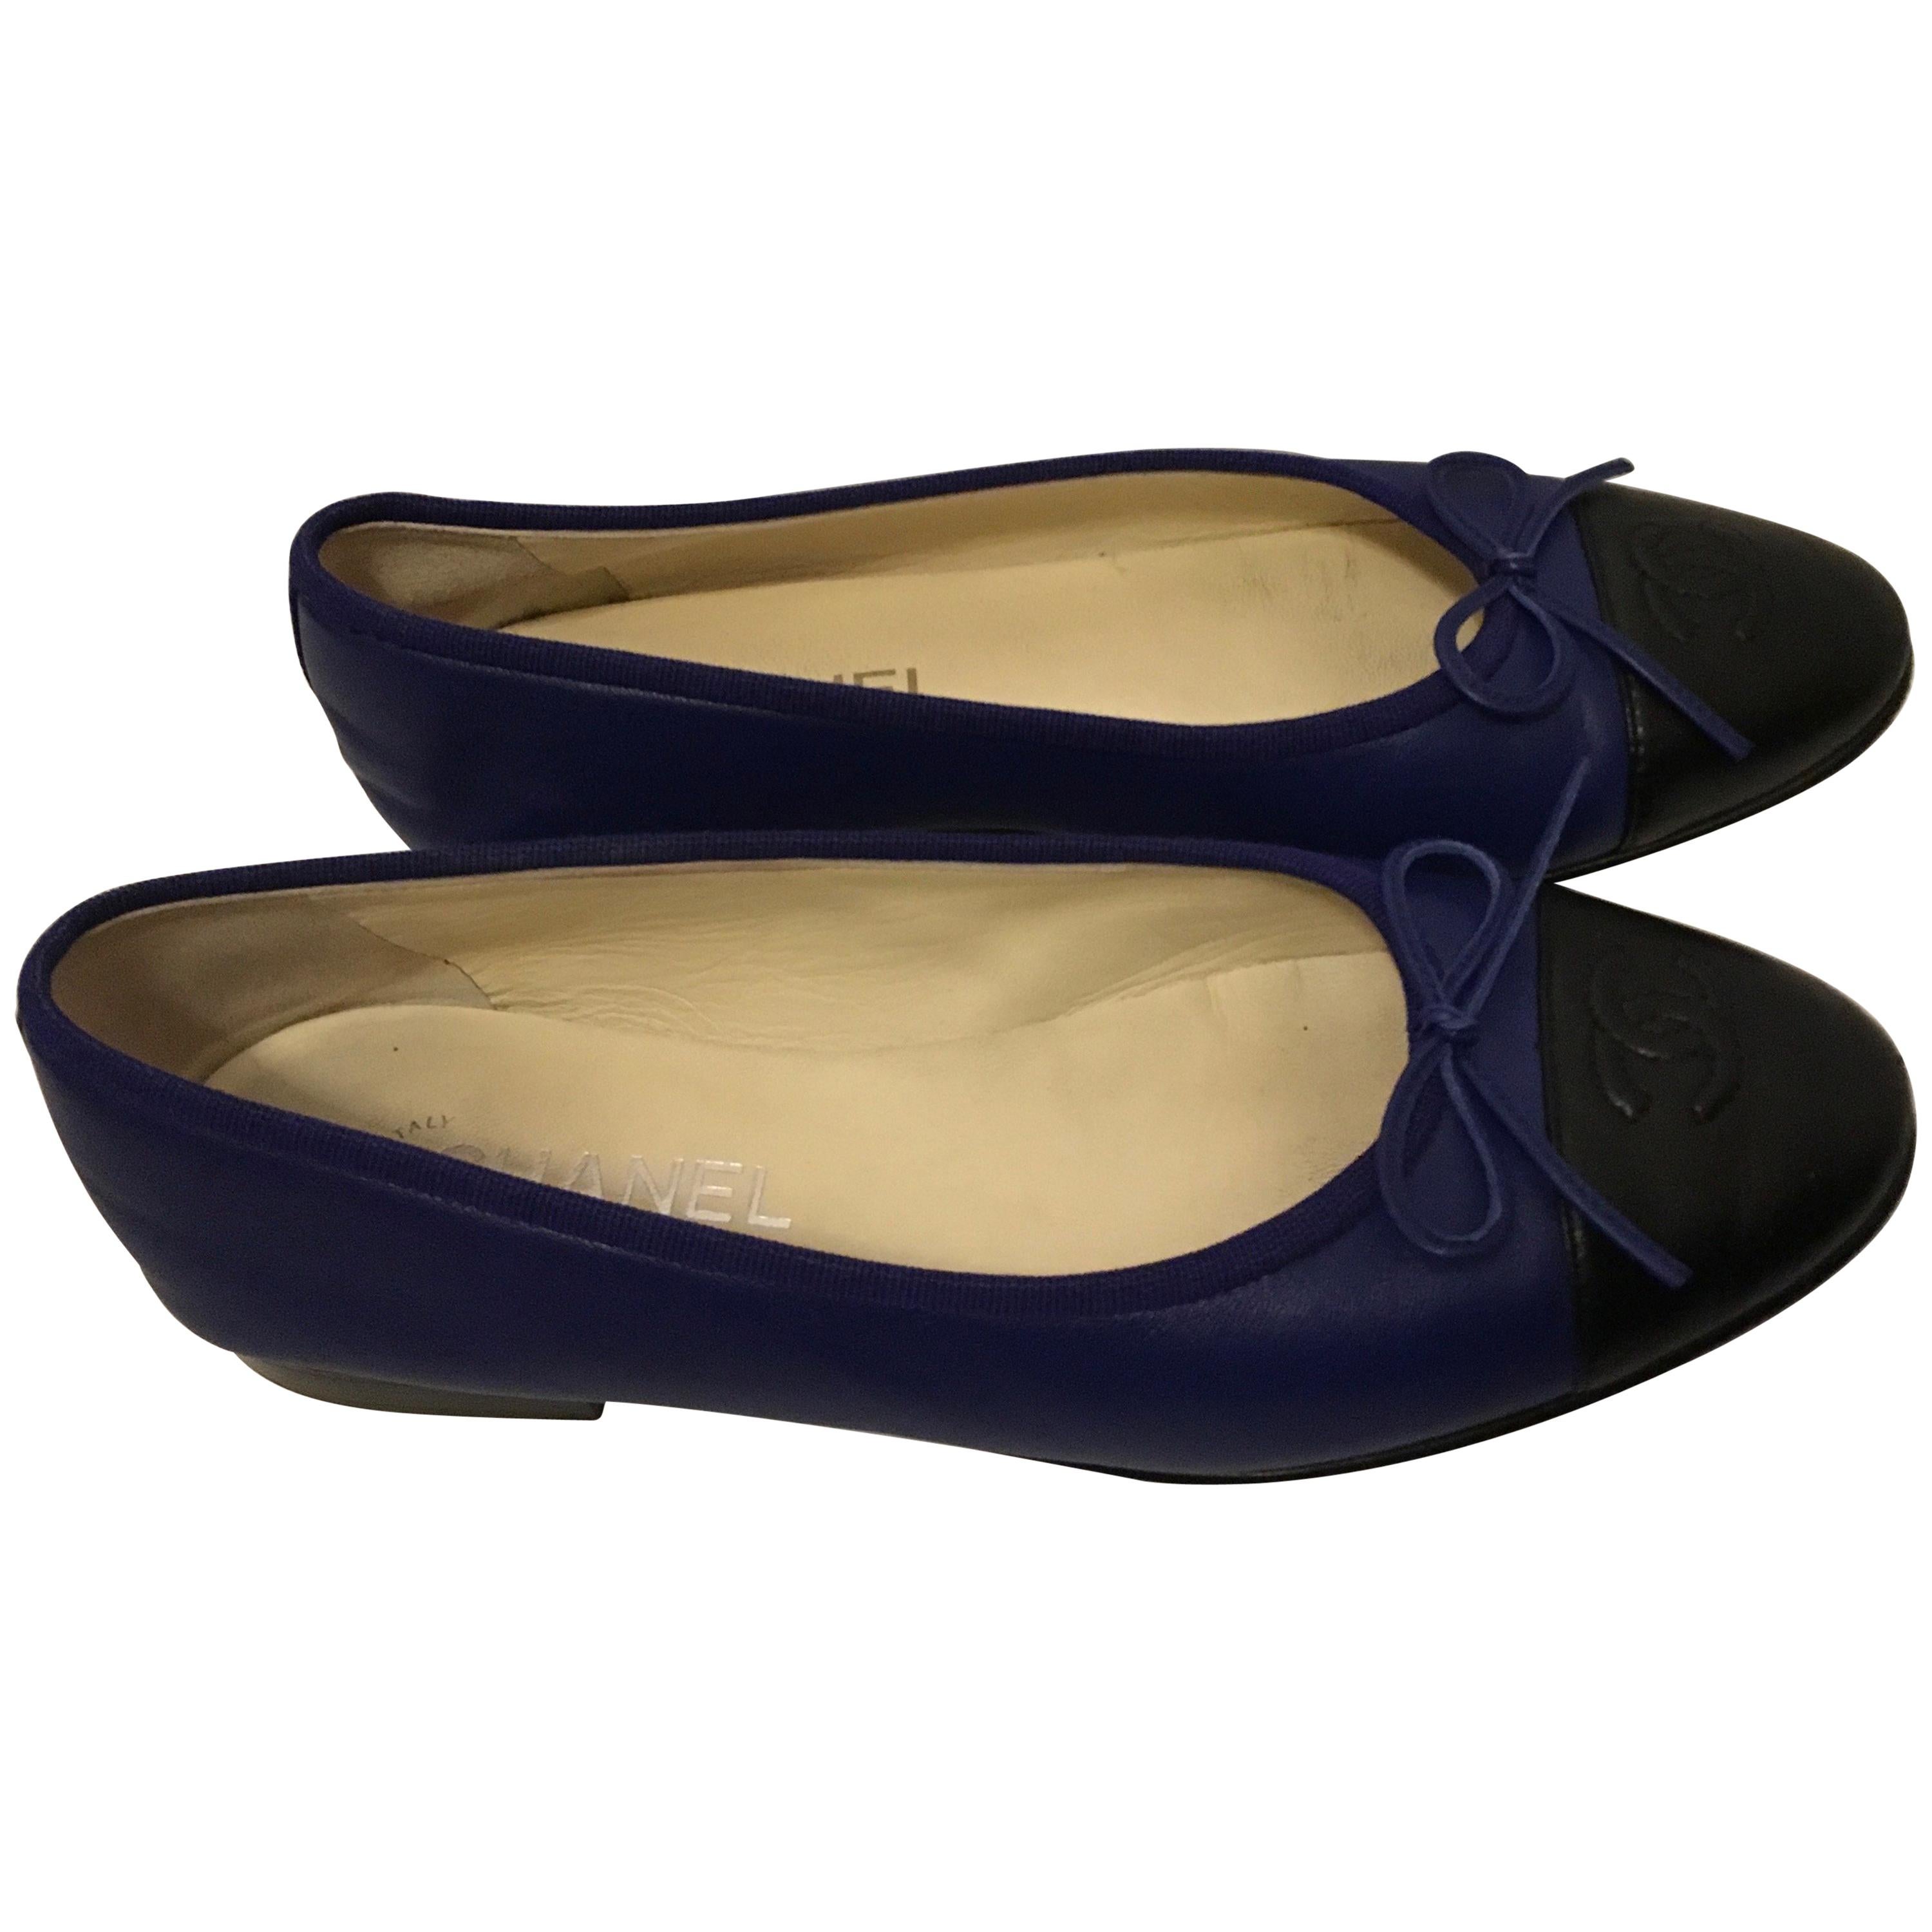 CHANEL, Shoes, Royal Blue Navy Chanel Ballerina Flats